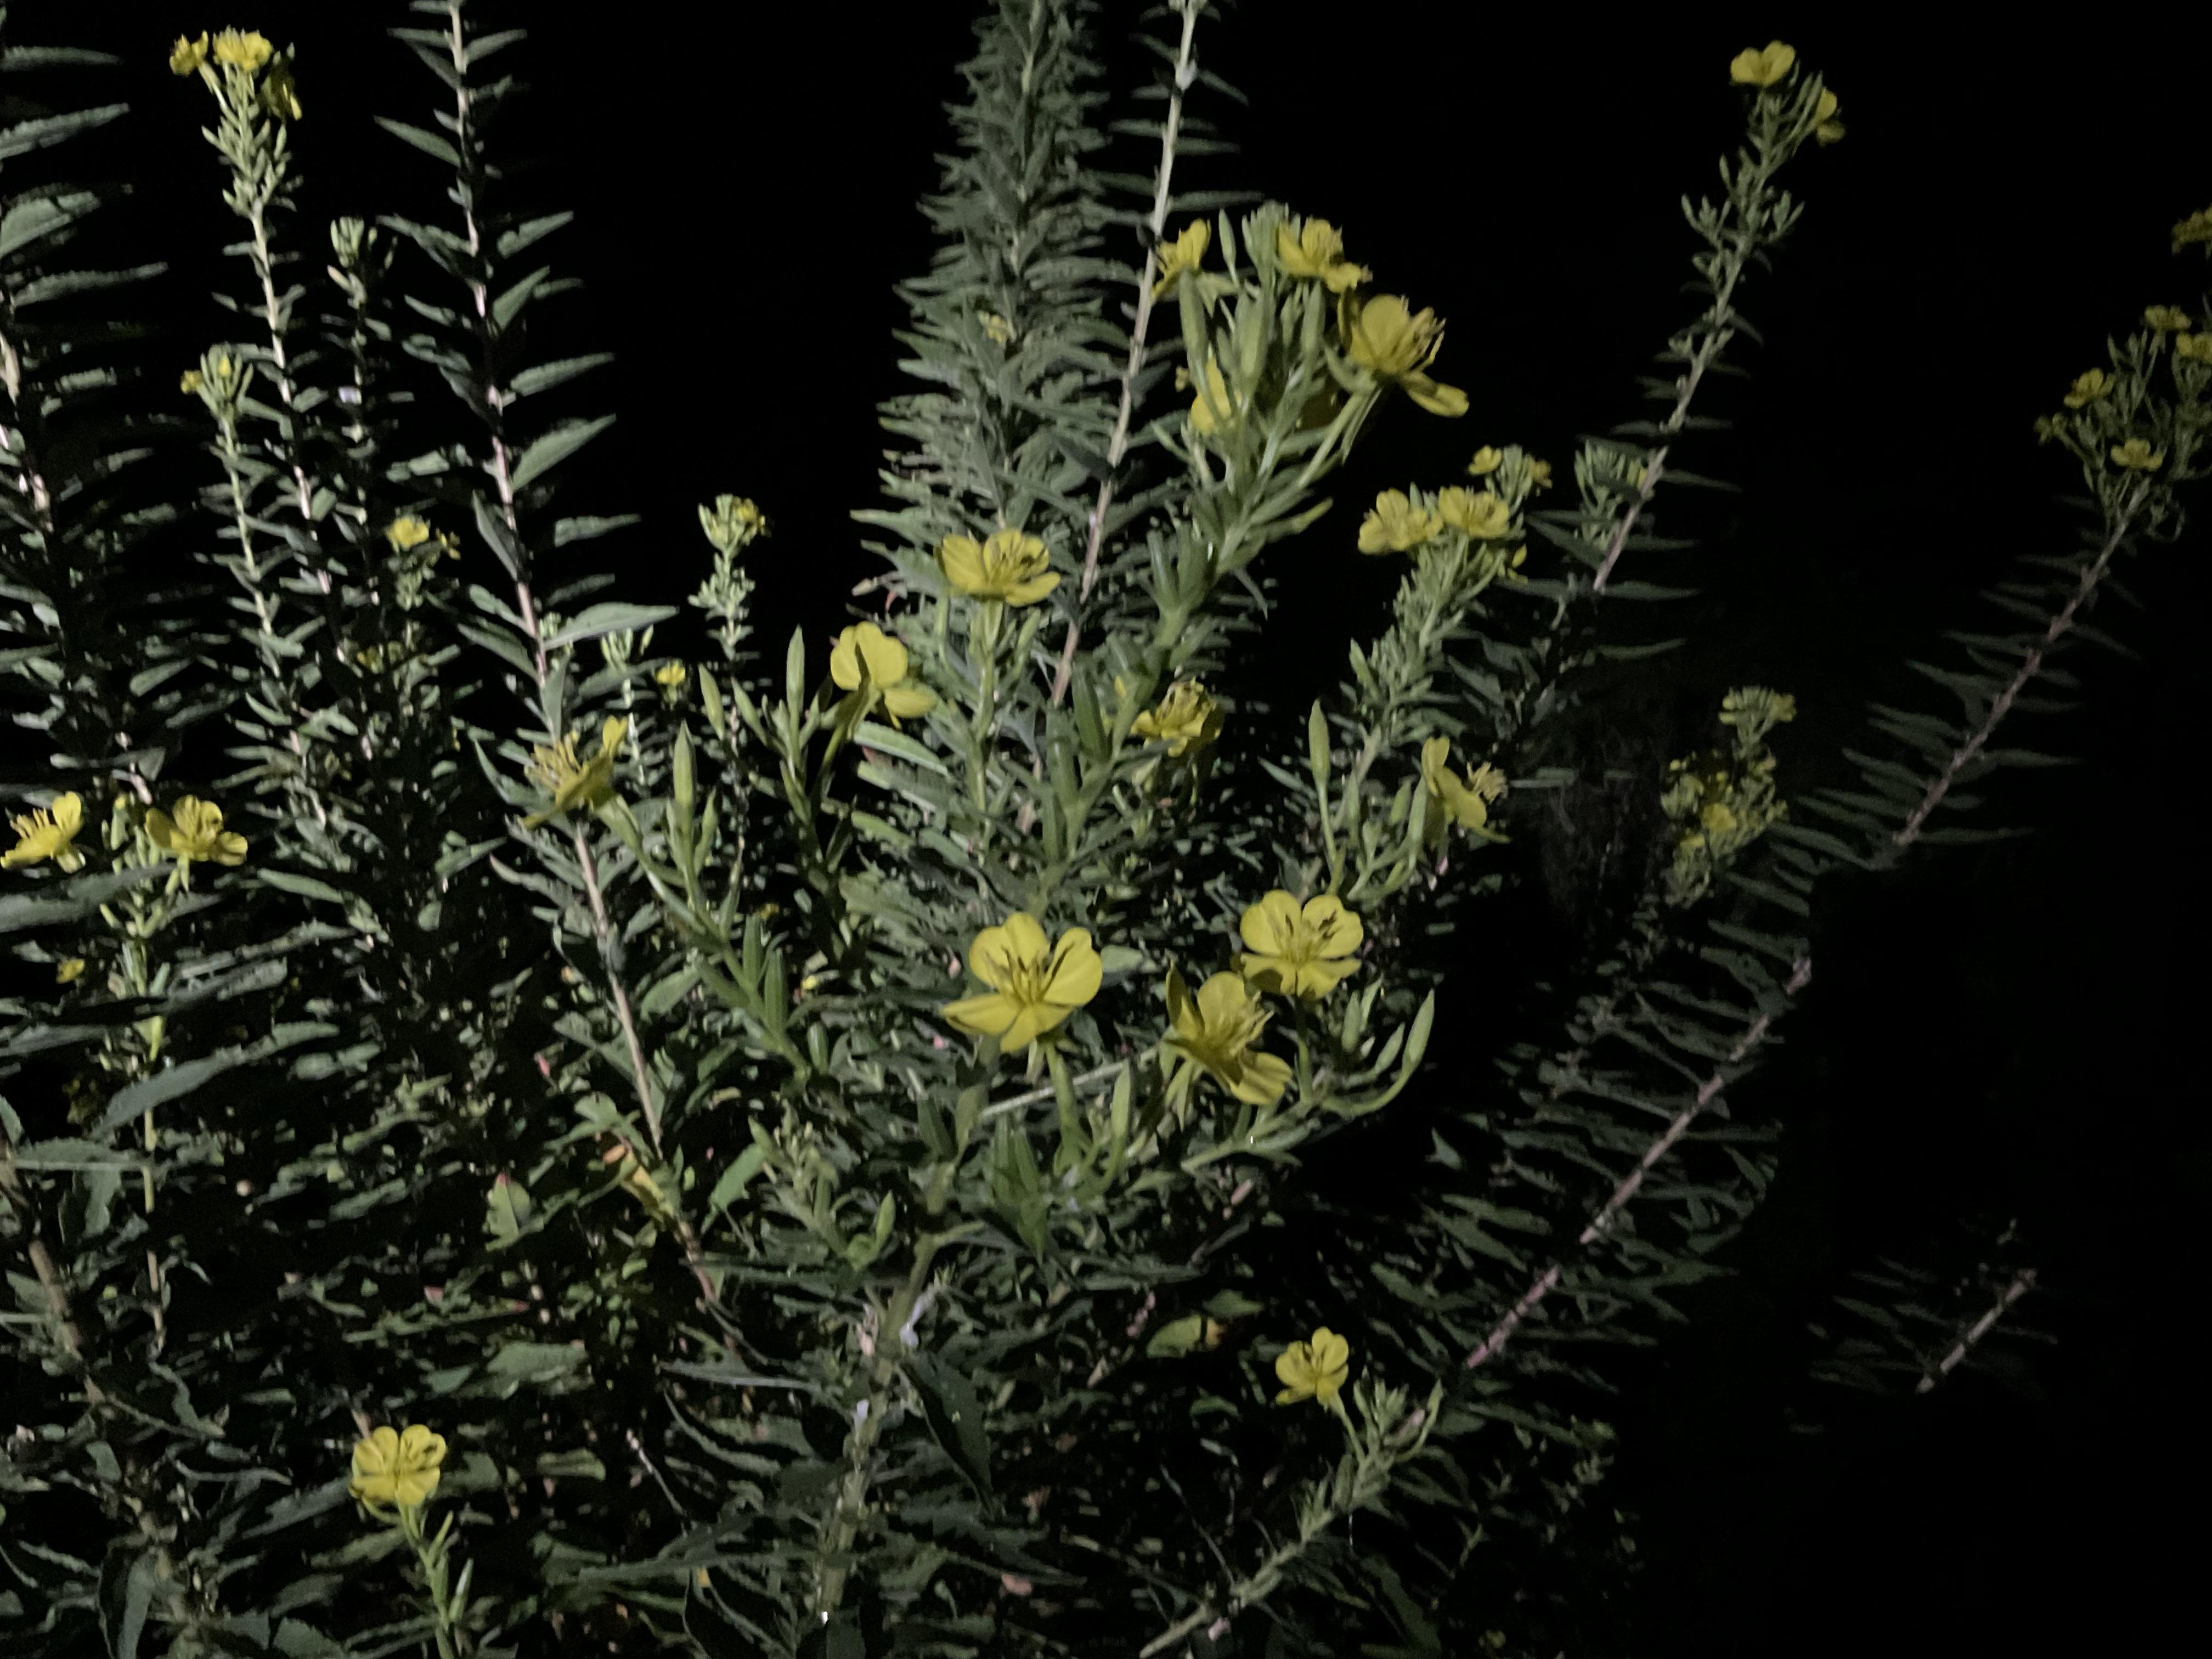 Evening Primrose Flowers on the plant - close up